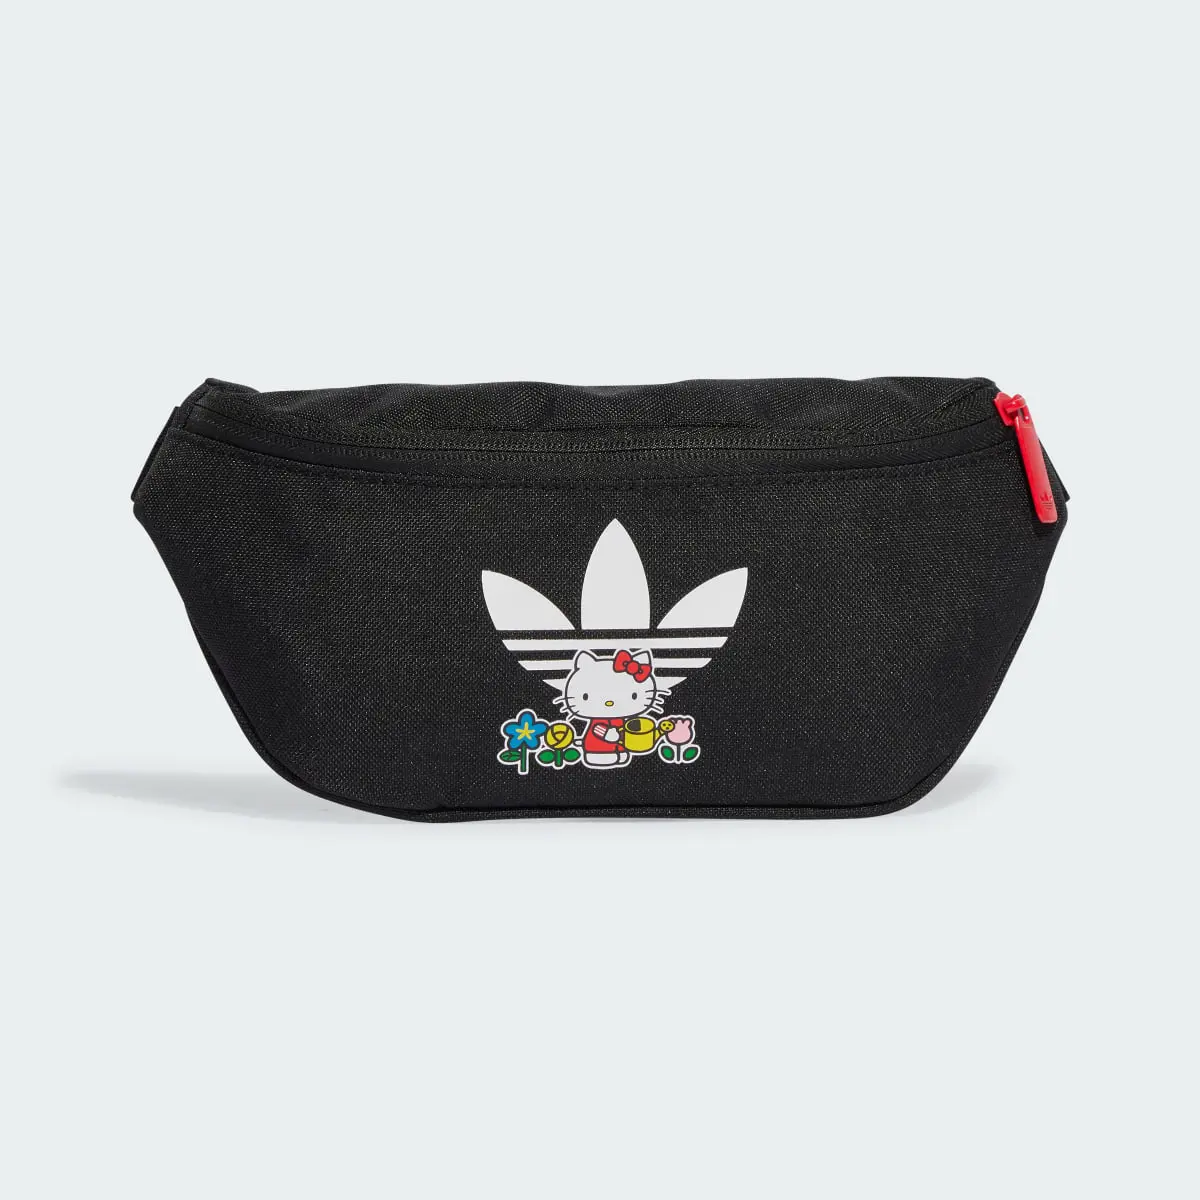 Adidas Originals x Hello Kitty Waist Bag. 2